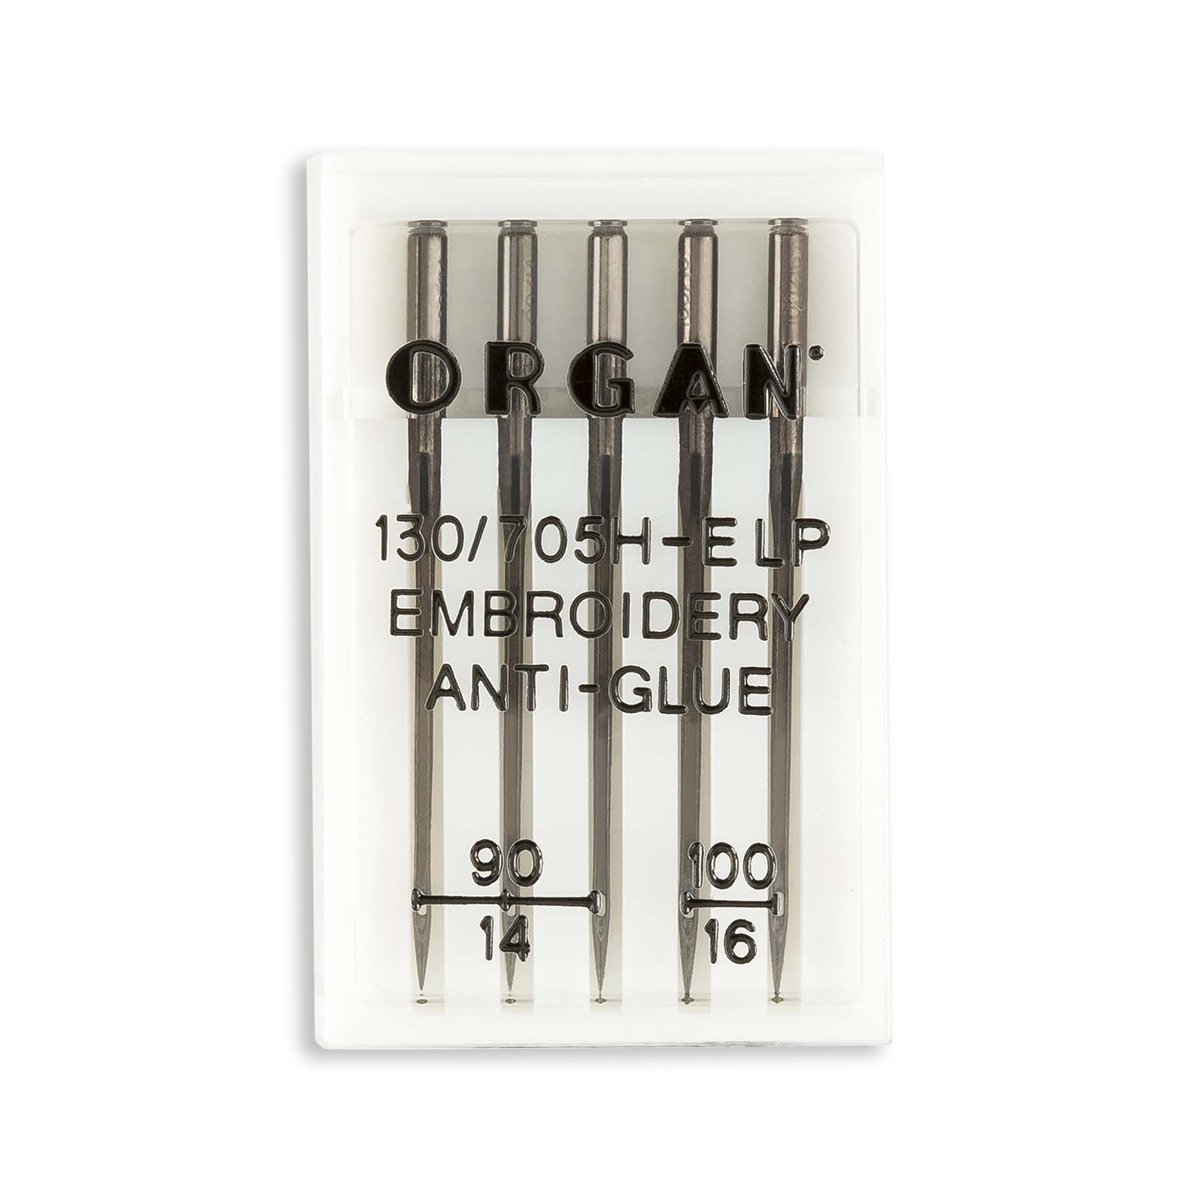 Organ Super Stretch Home Machine Needles - 15x1, 130/705H, HAx1SP - 5/Pack  - WAWAK Sewing Supplies